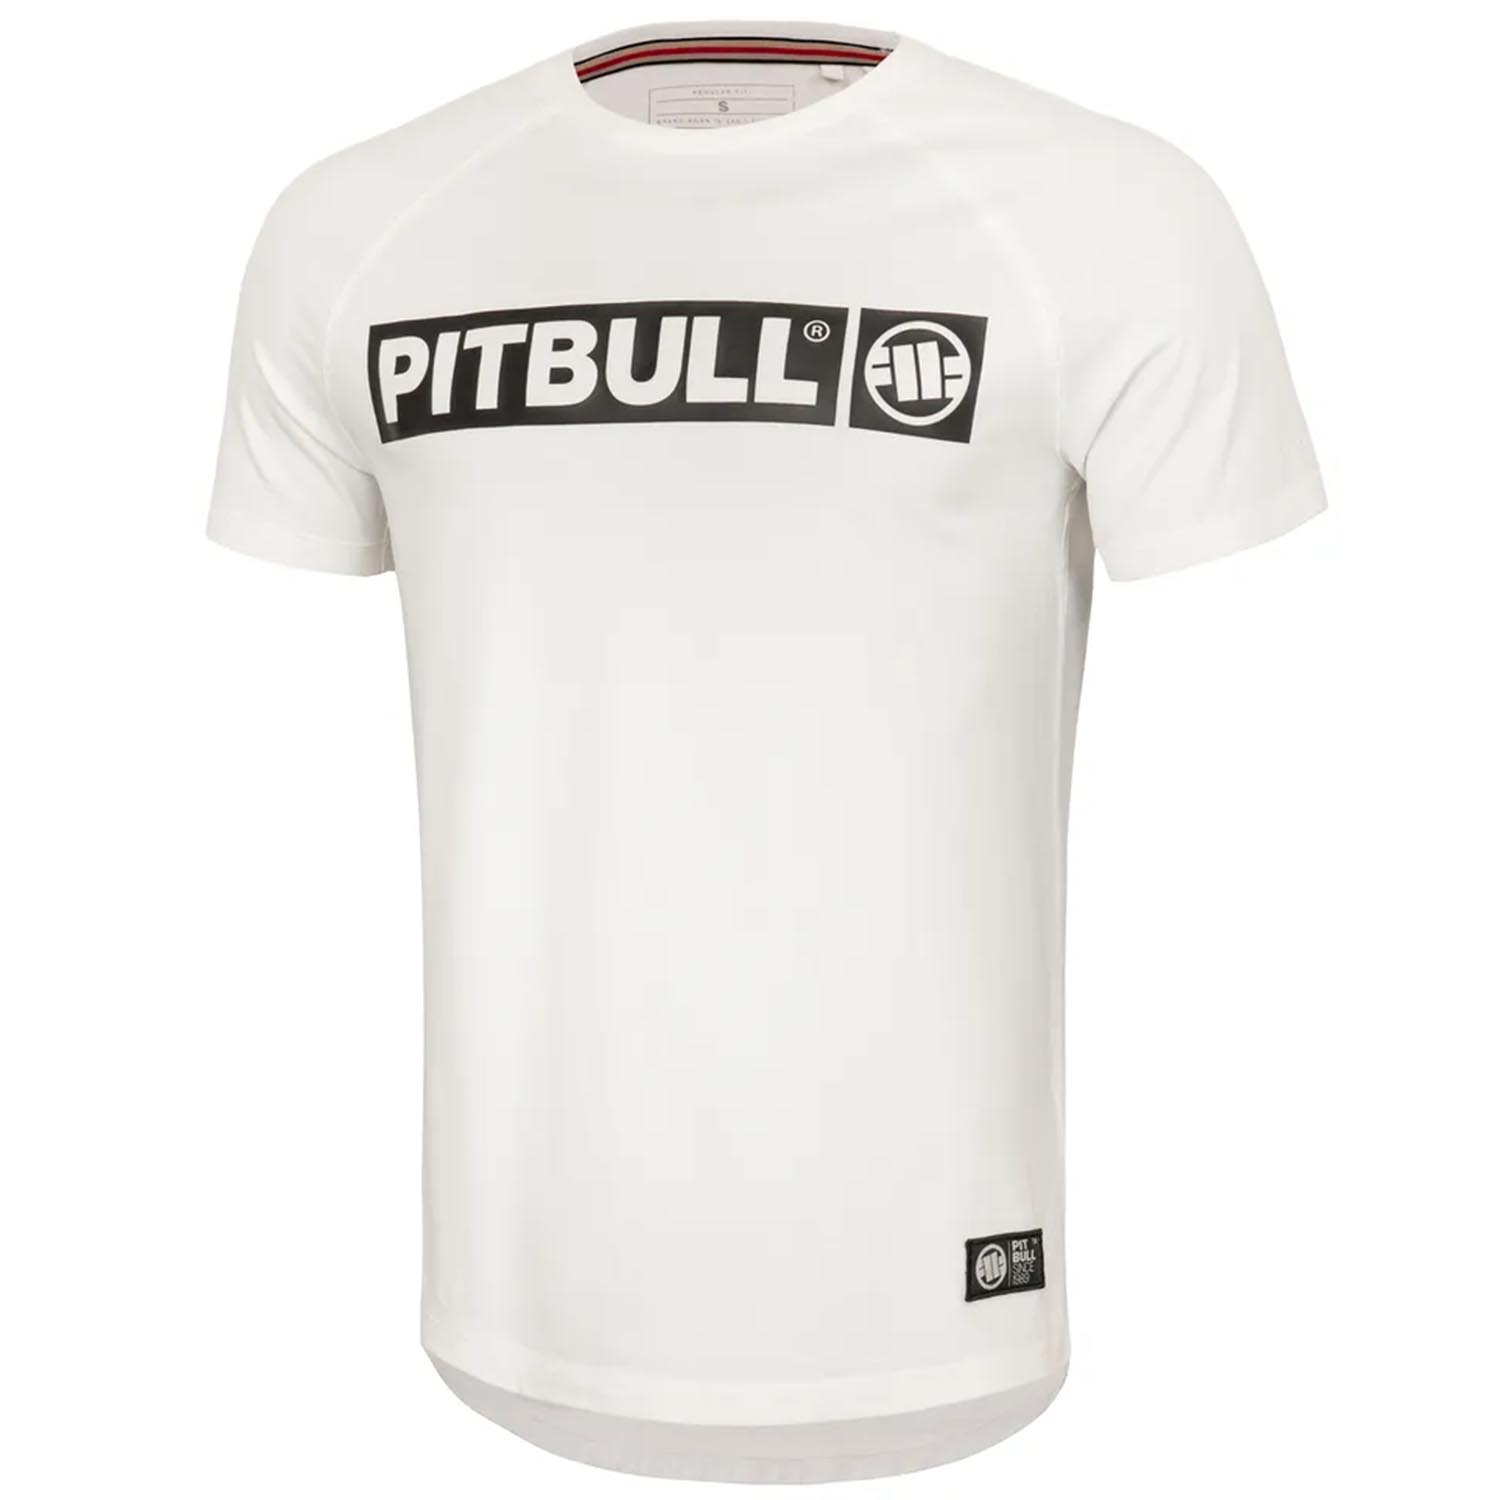 Pit Bull West Coast T-Shirt, Hilltop 210 Spandex, weiß, XXXL